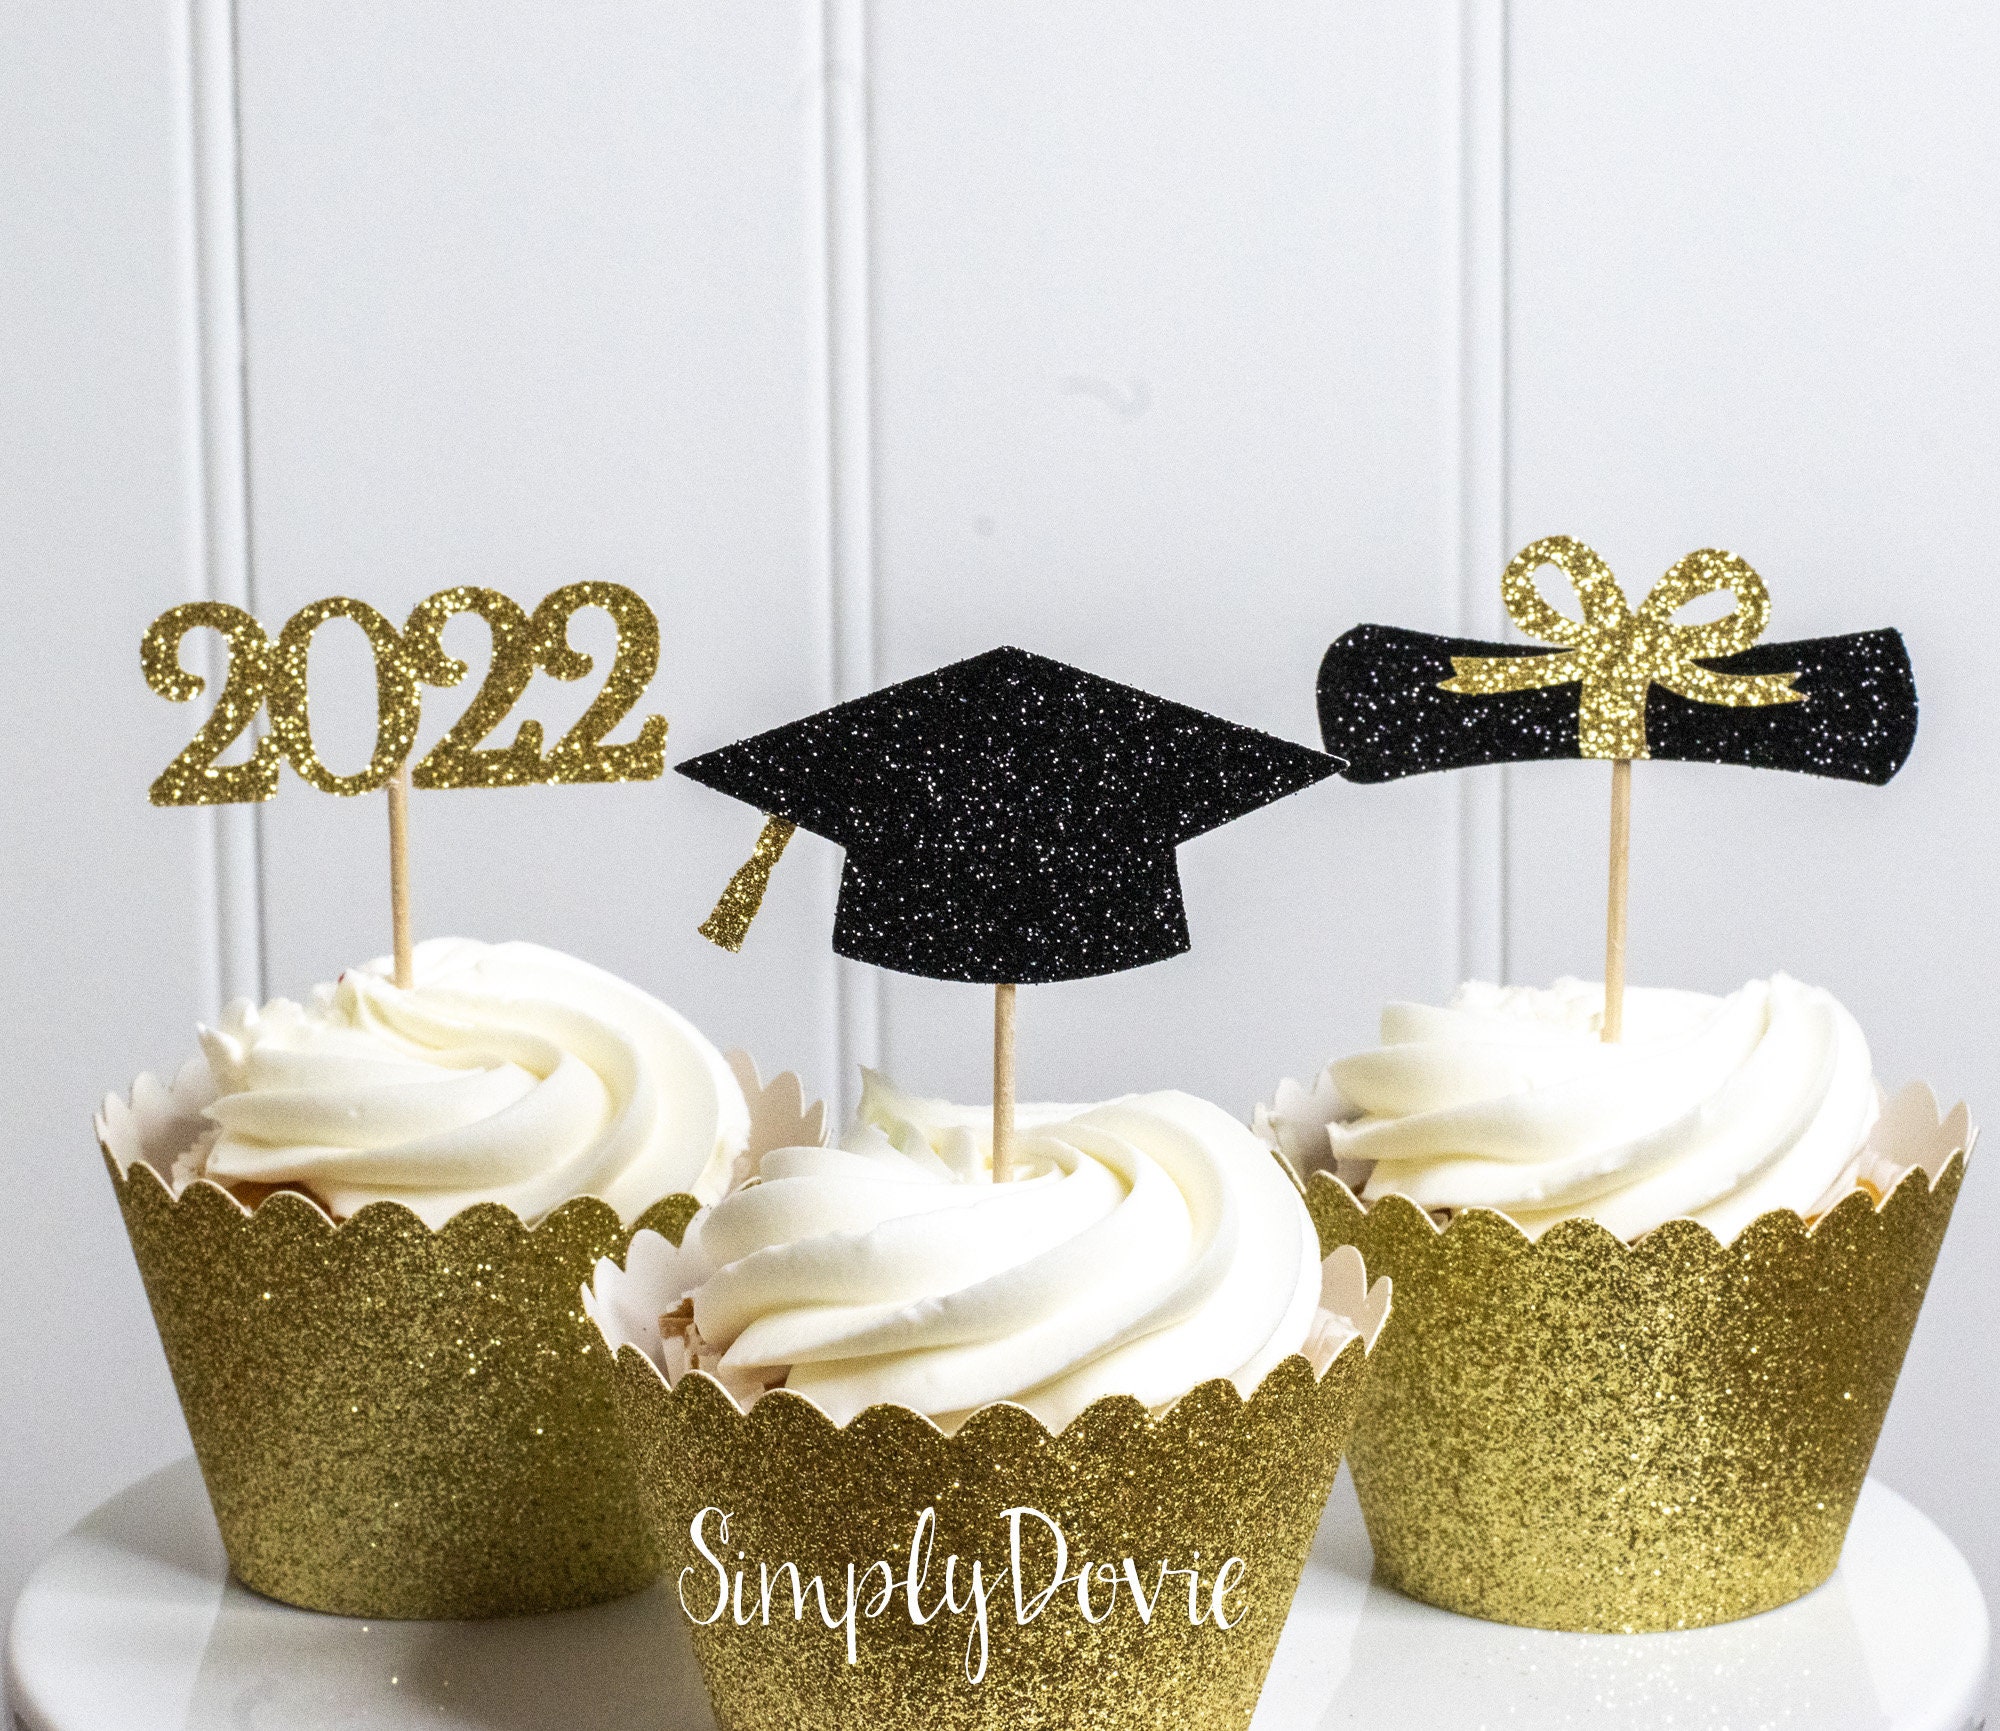 48 Pieces Mini Cake Decorations for 2019 Congrats Grad Party Supplies GLEIM Graduation Cupcake Toppers 